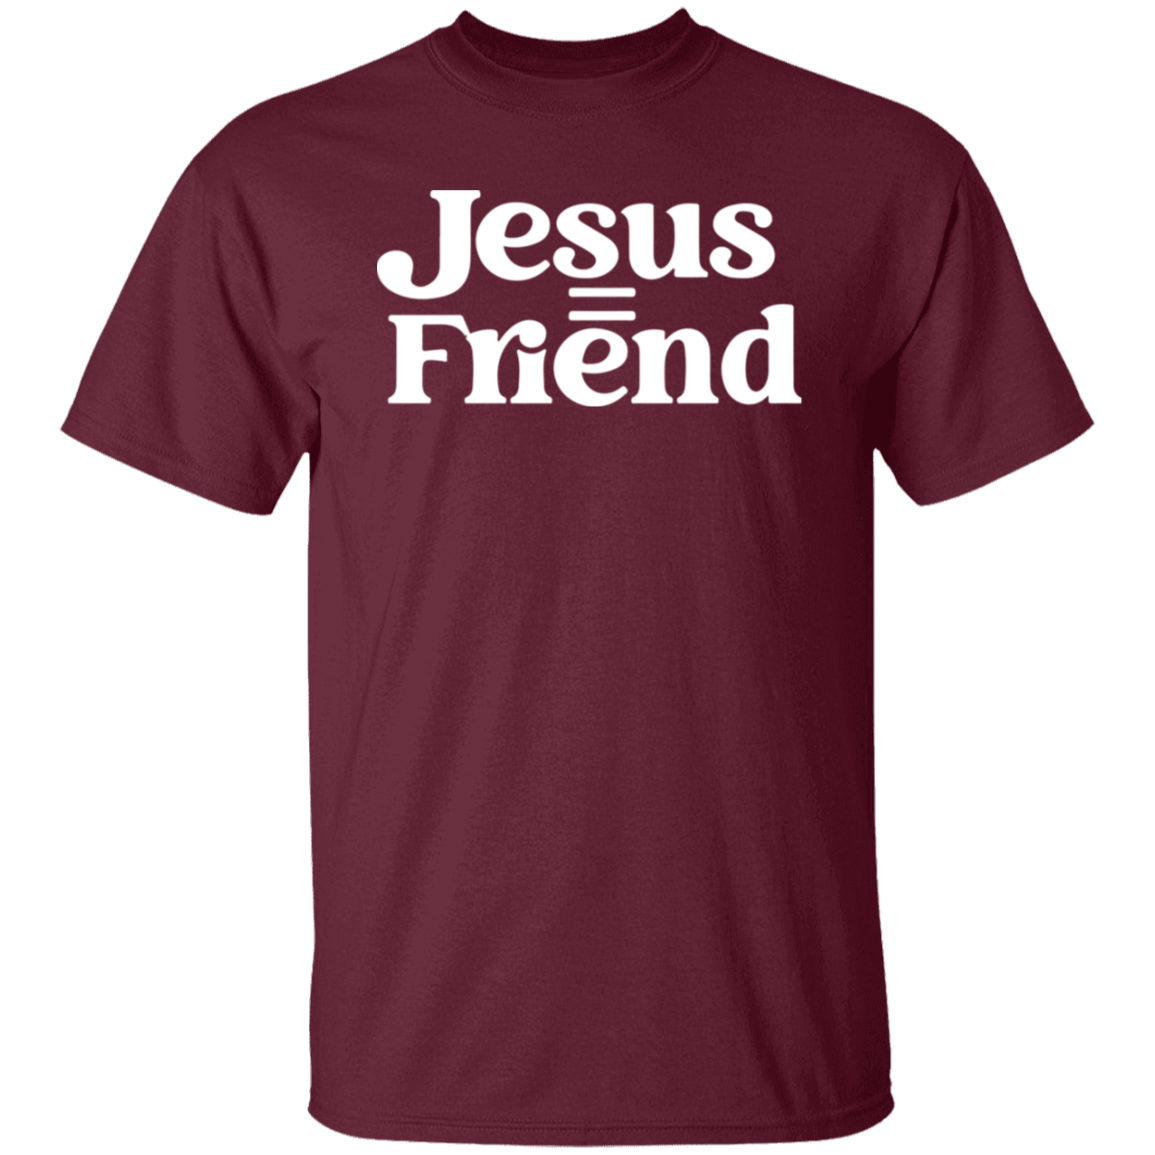 Jesus = Friend